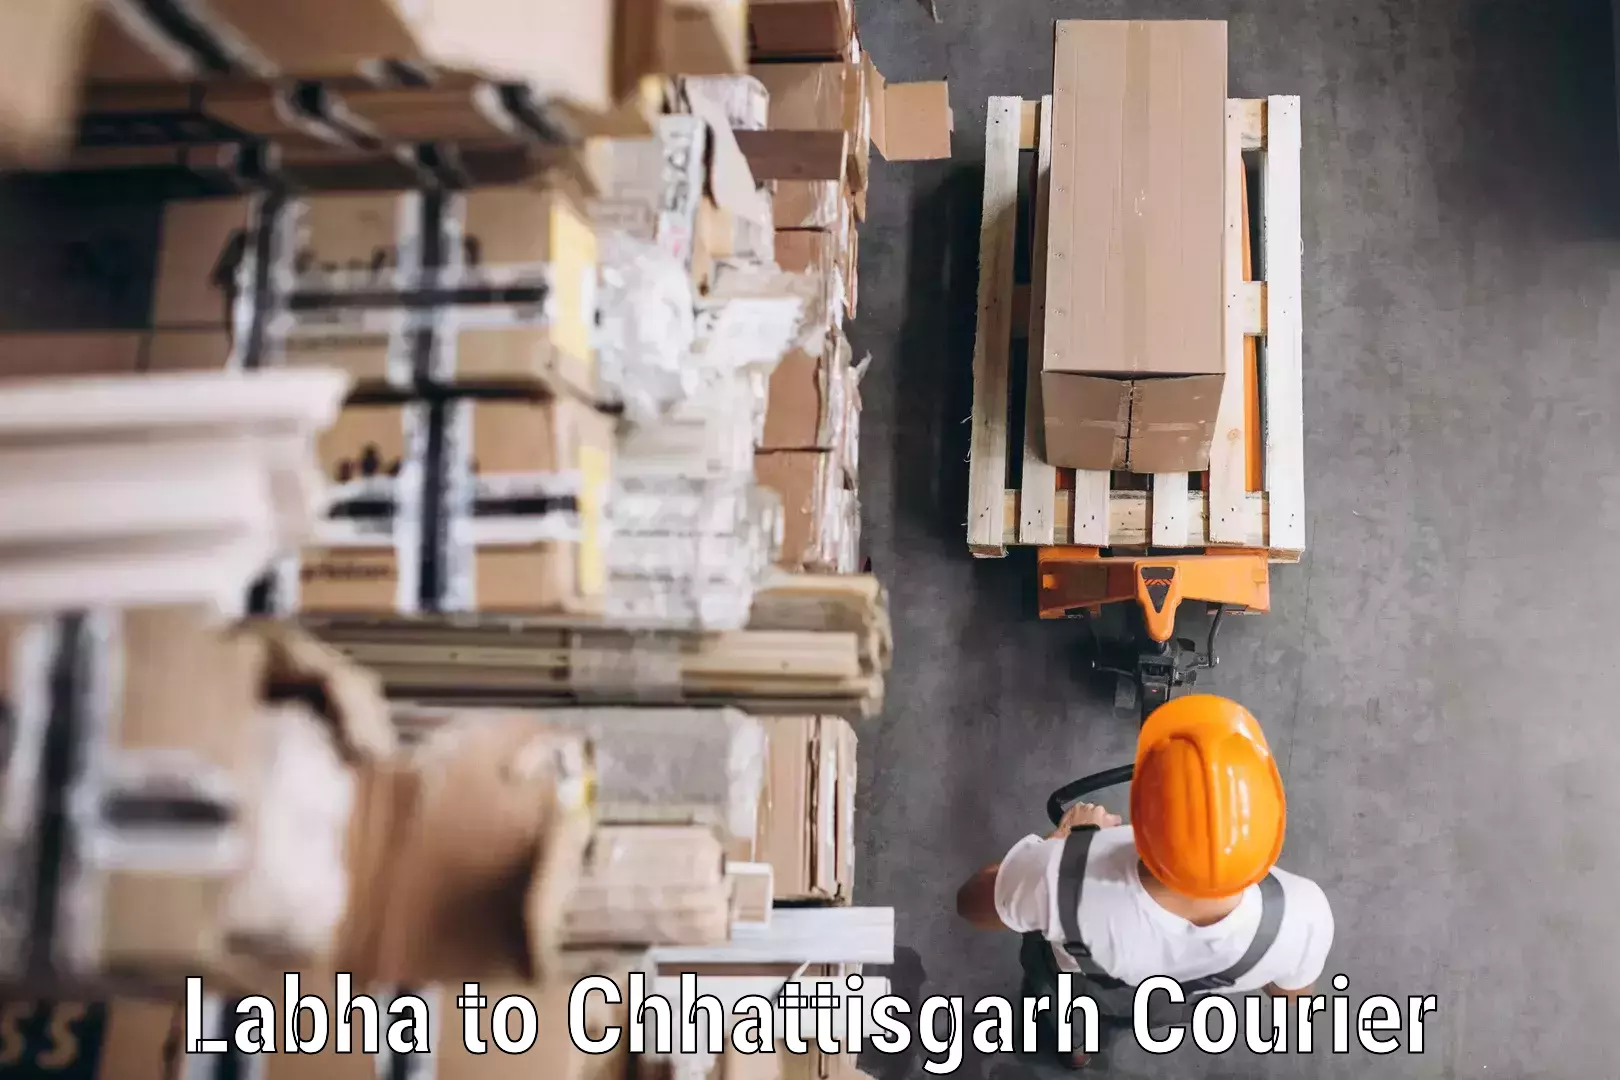 Urgent courier needs Labha to Patna Chhattisgarh